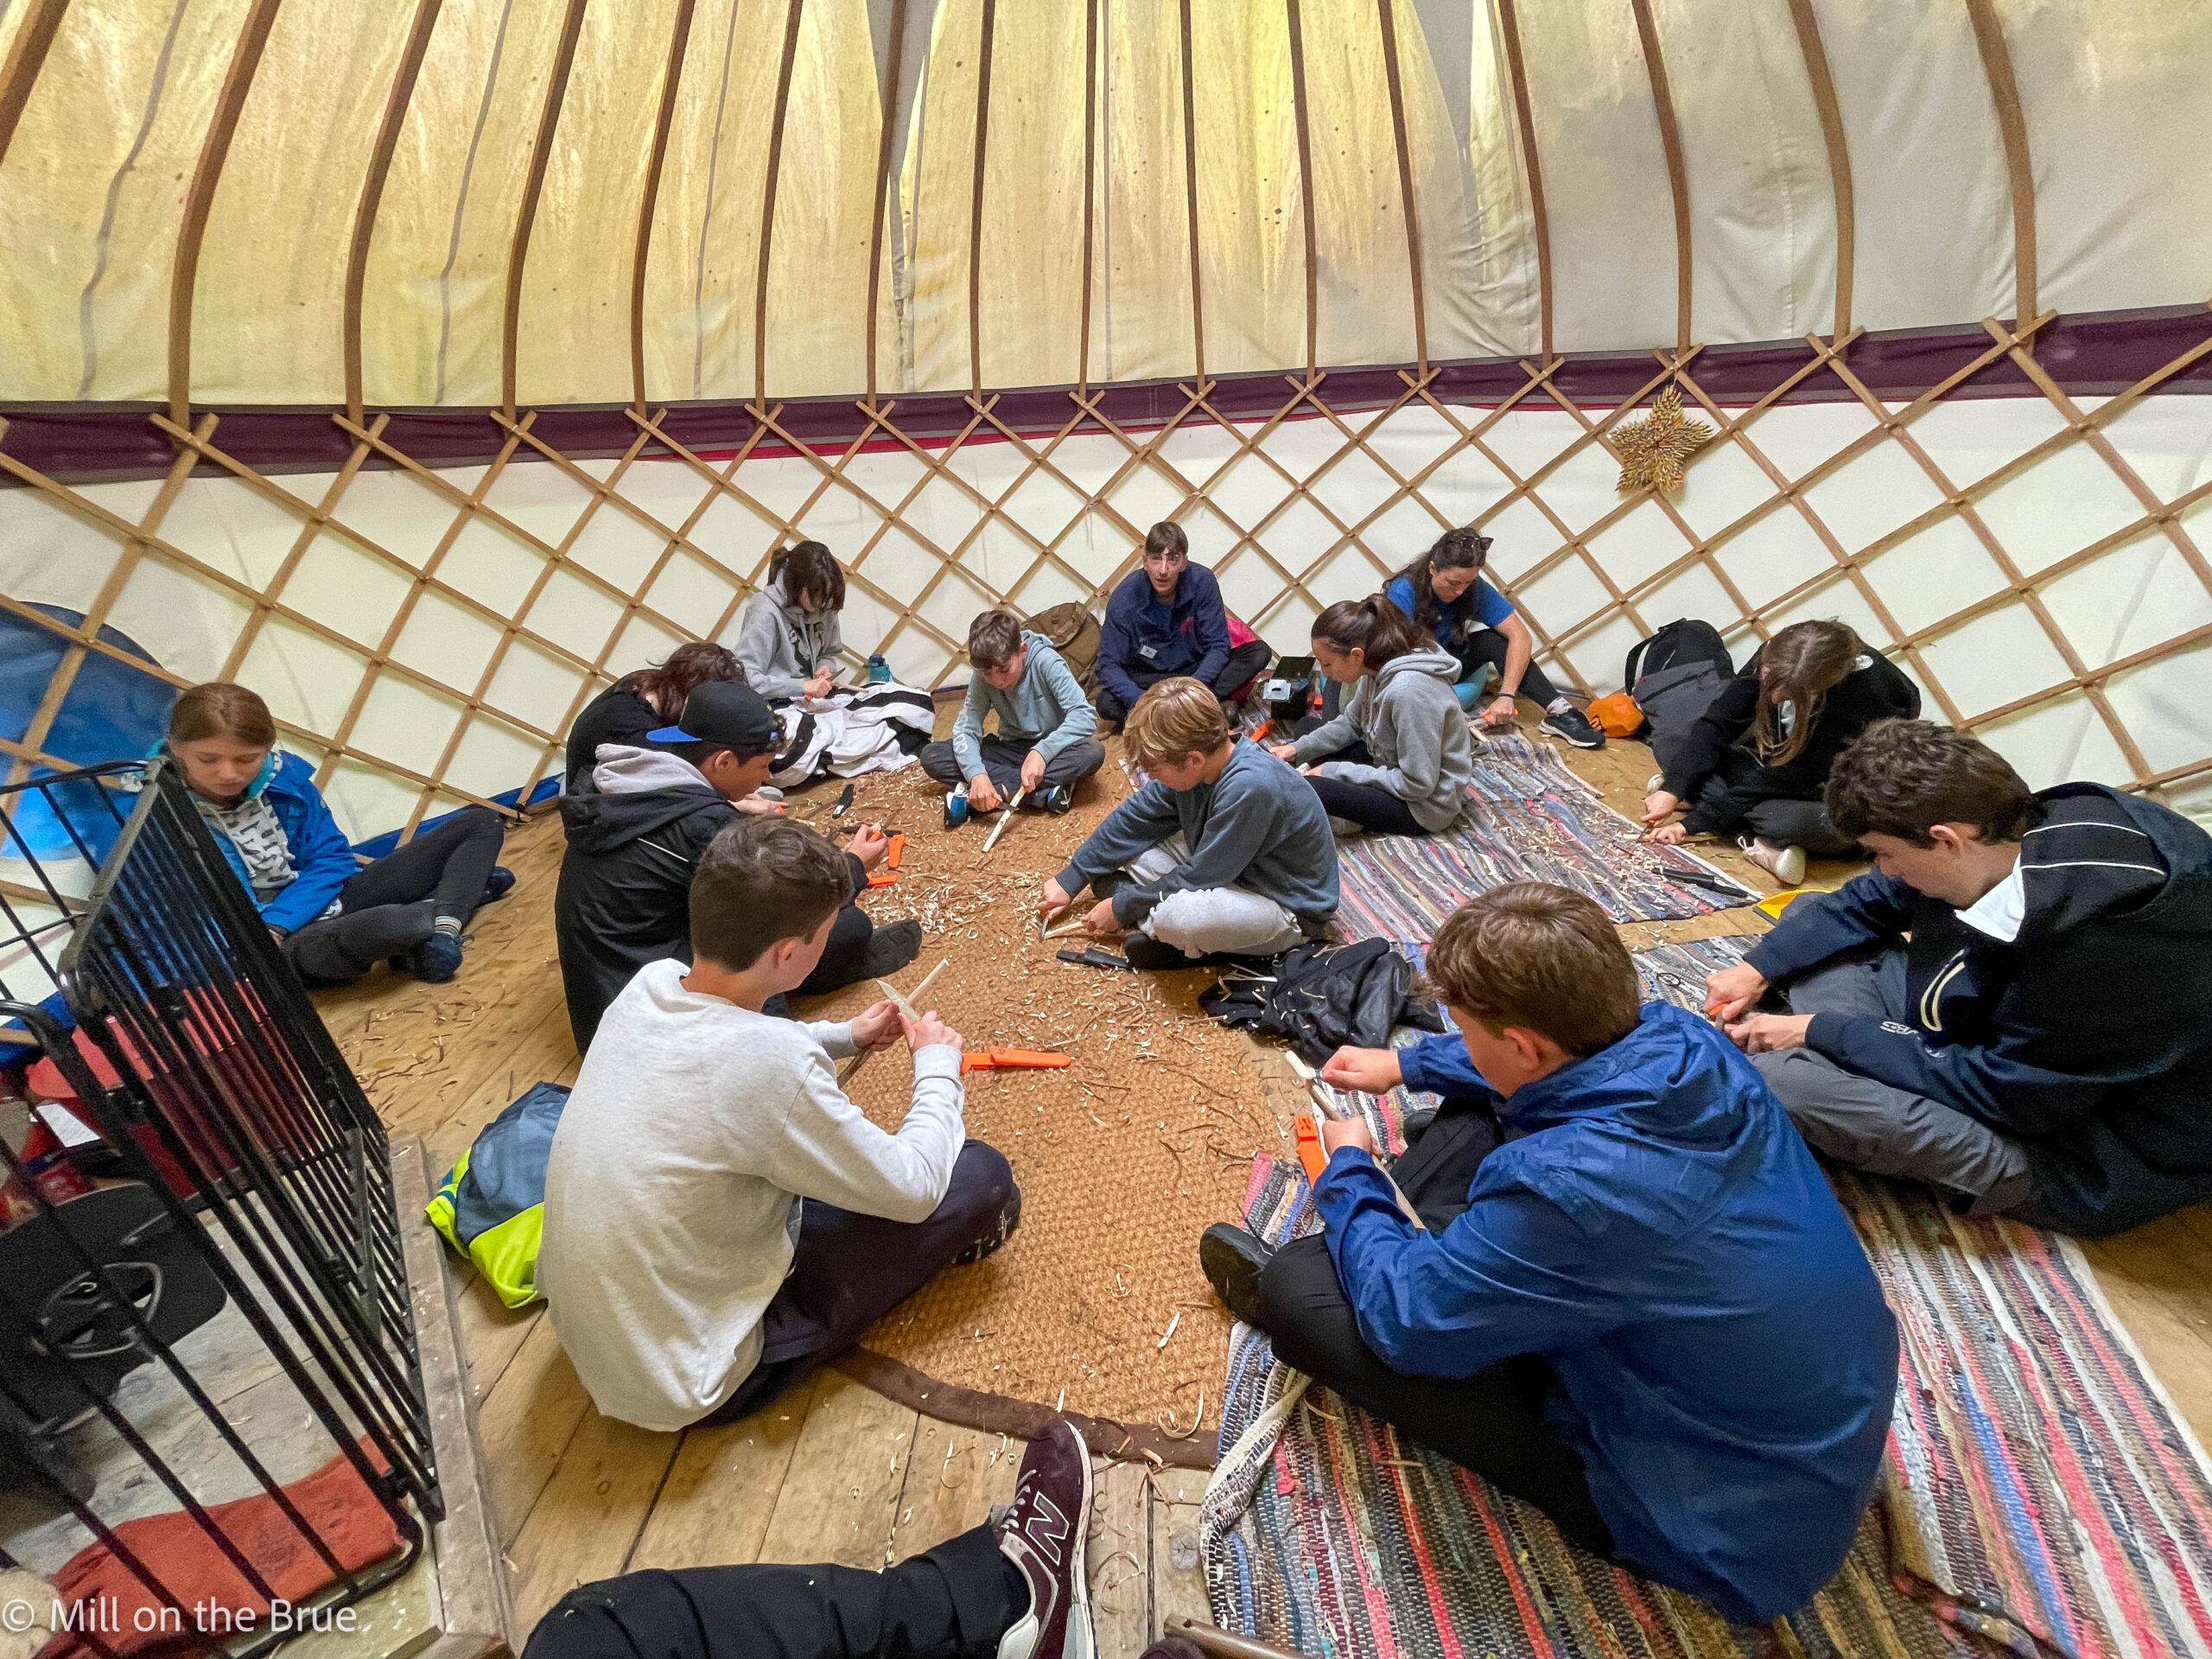 bushcraft in the yurt